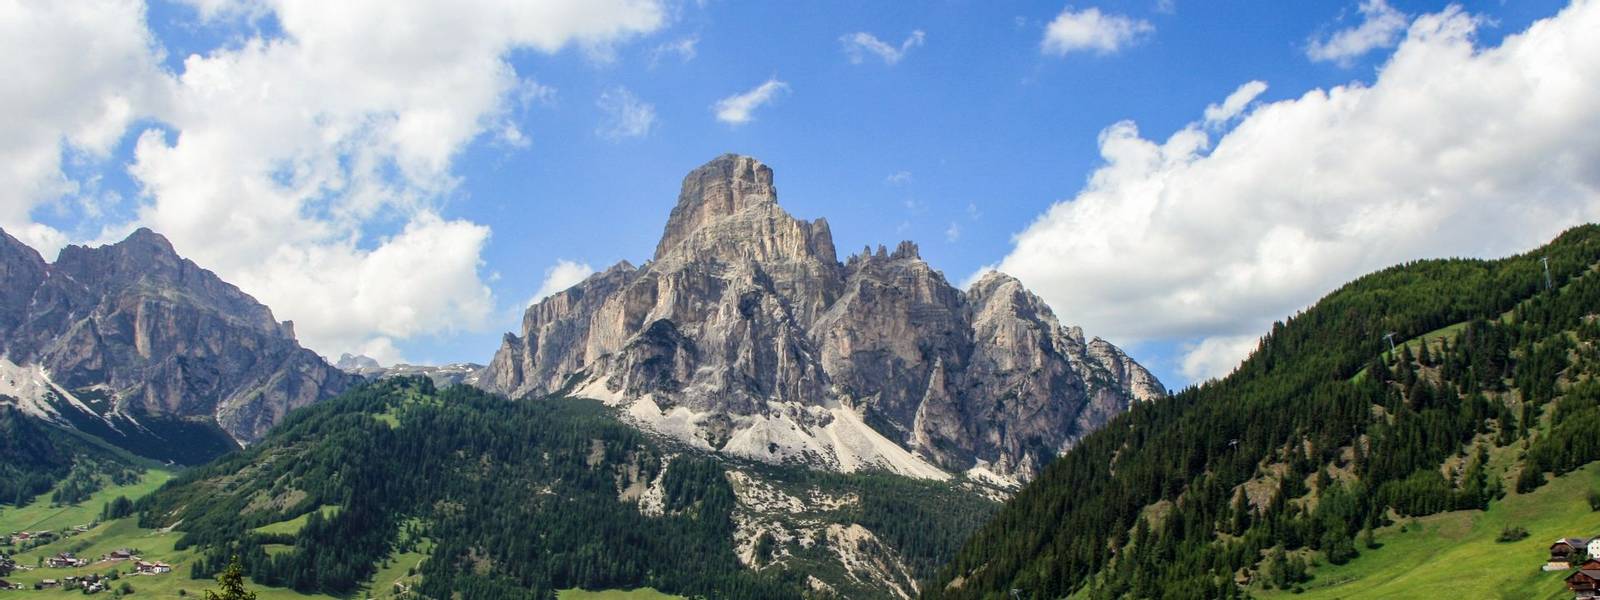 The Dolomites - Selva - AdobeStock_99350910.jpeg